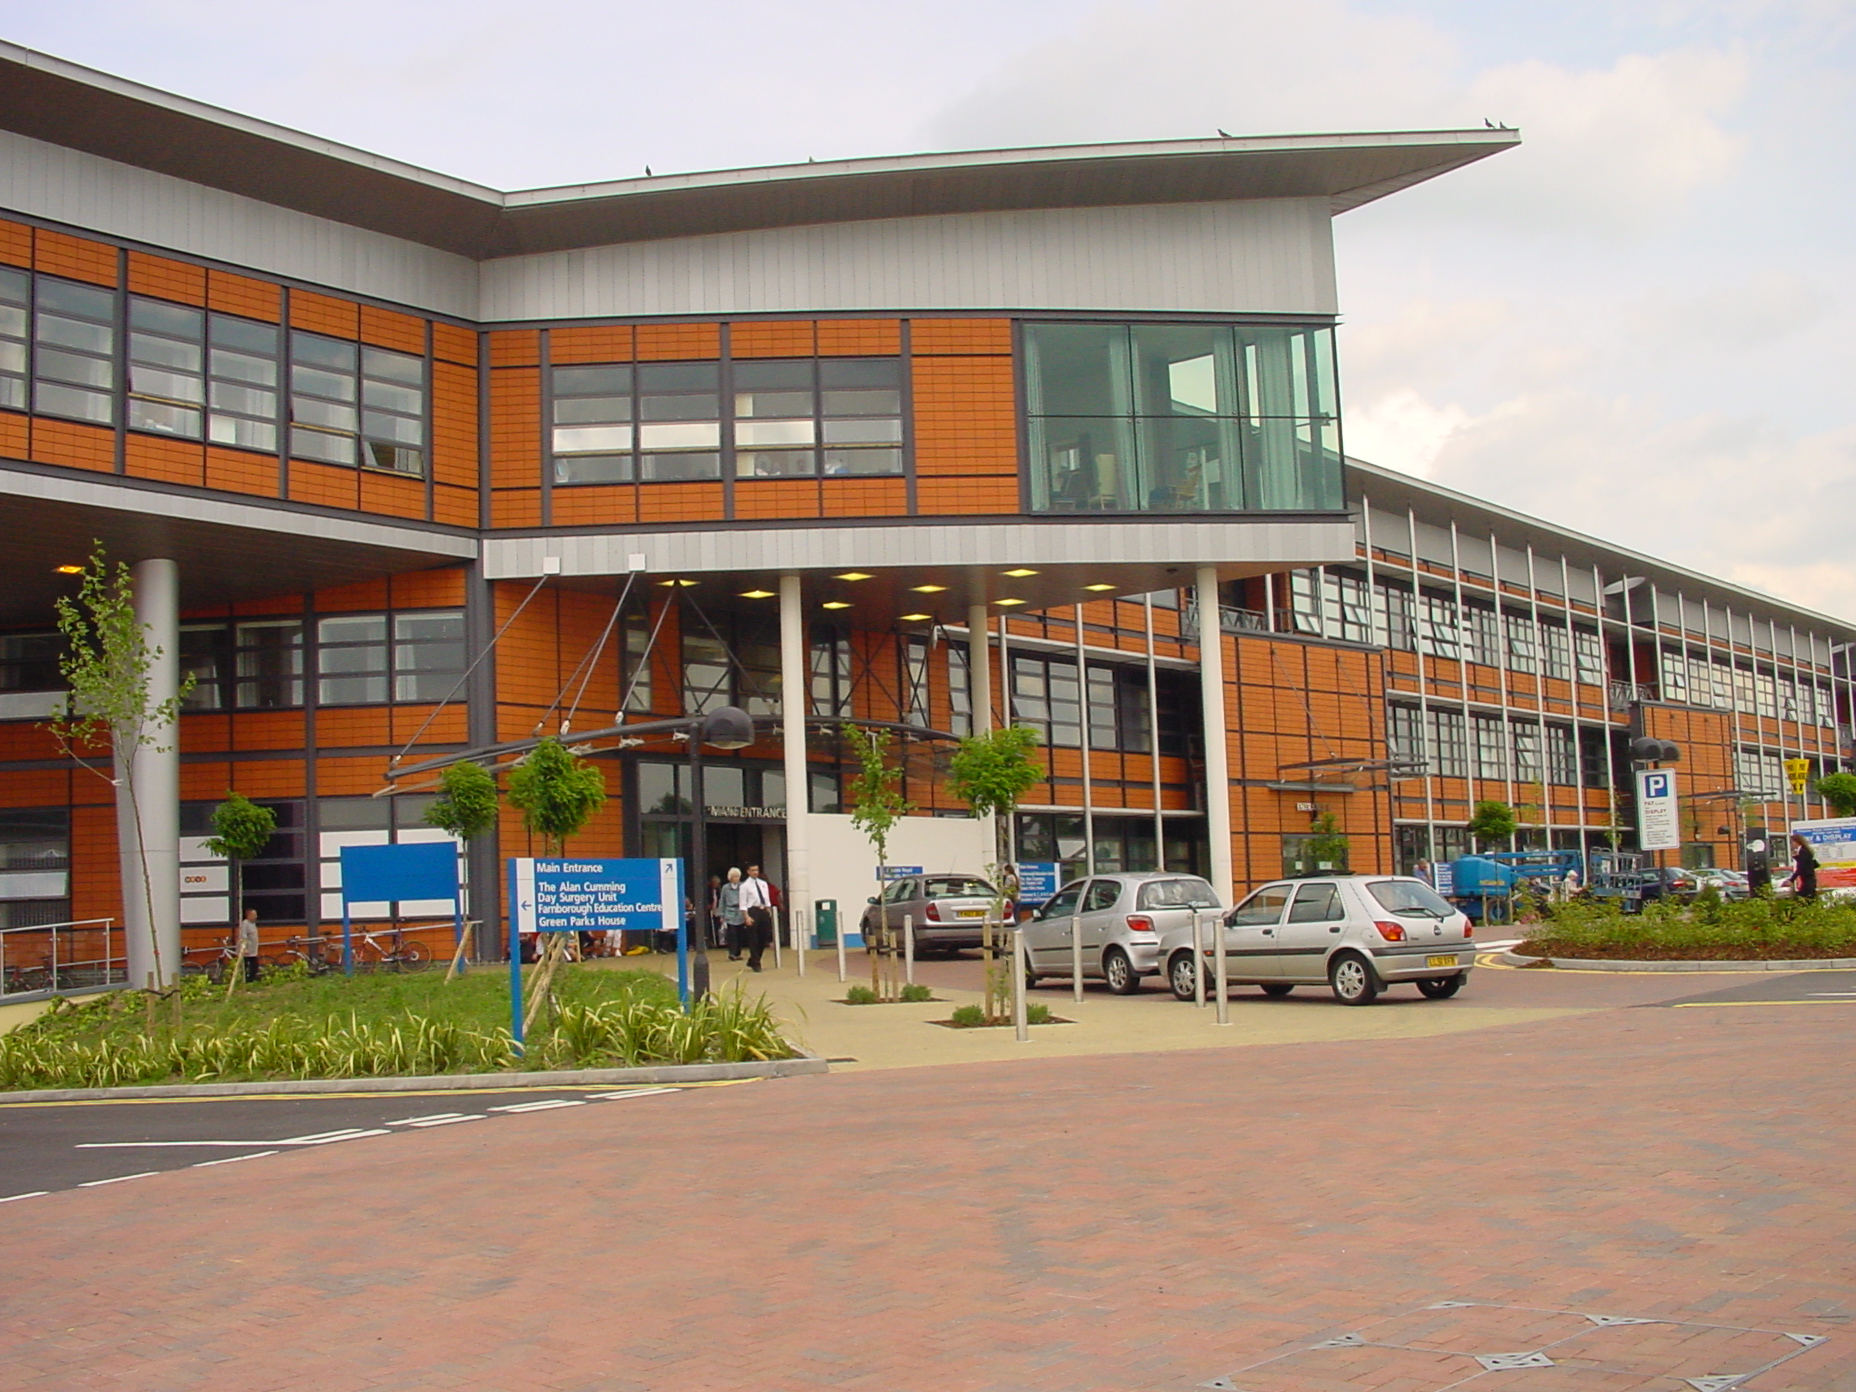 Patient describes Princess Royal University Hospital ward as 'disgusting'